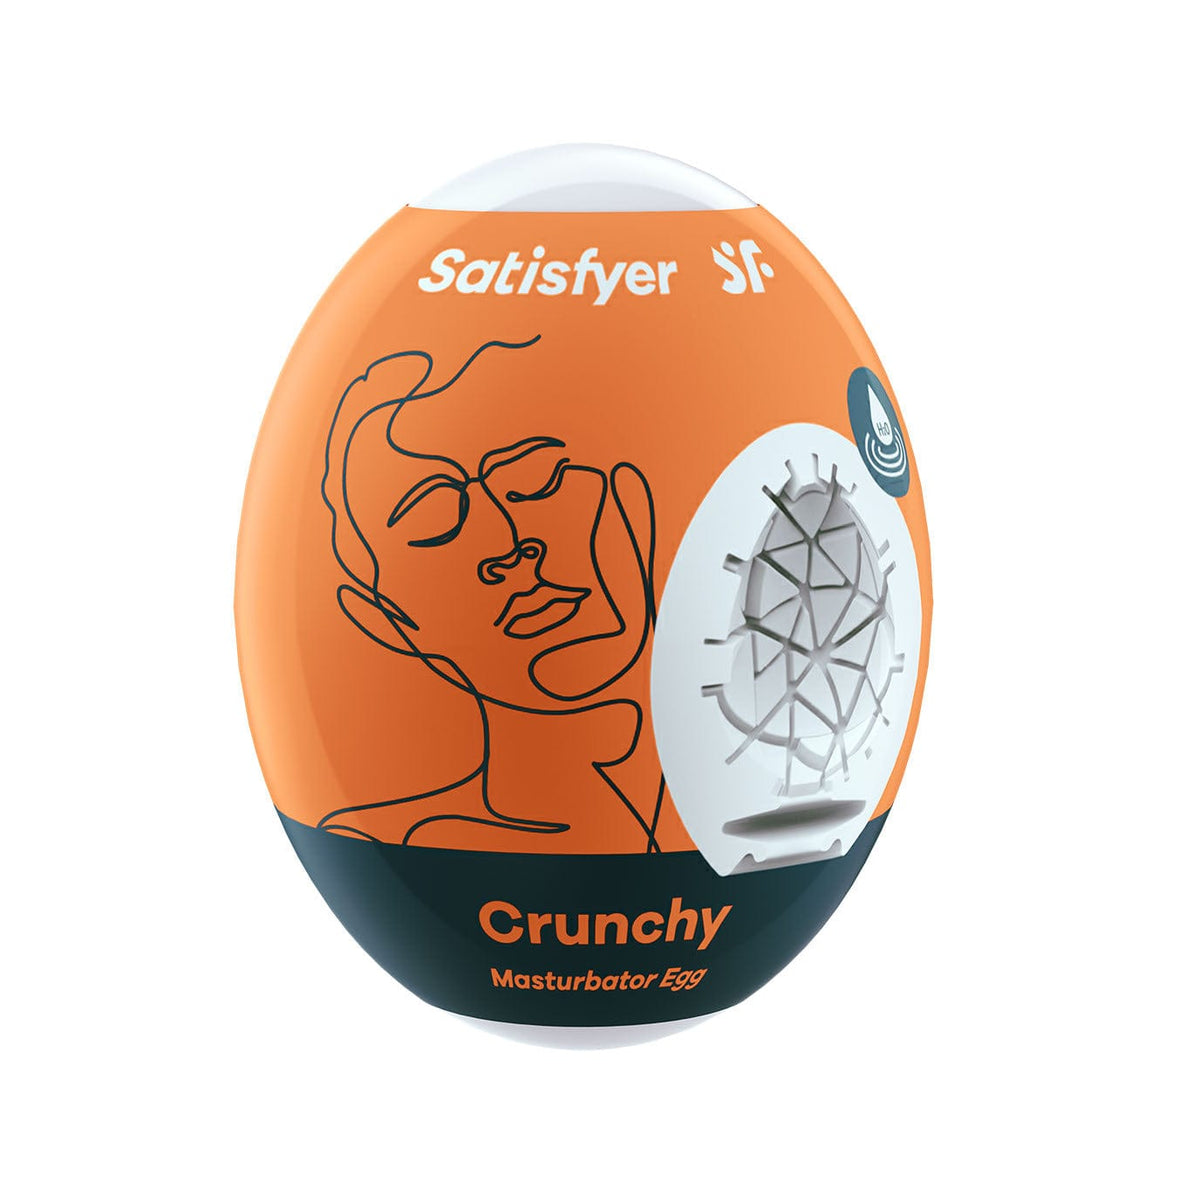 Satisfyer - Naughty Masturbator Egg (Orange) -  Masturbator Egg (Non Vibration)  Durio.sg